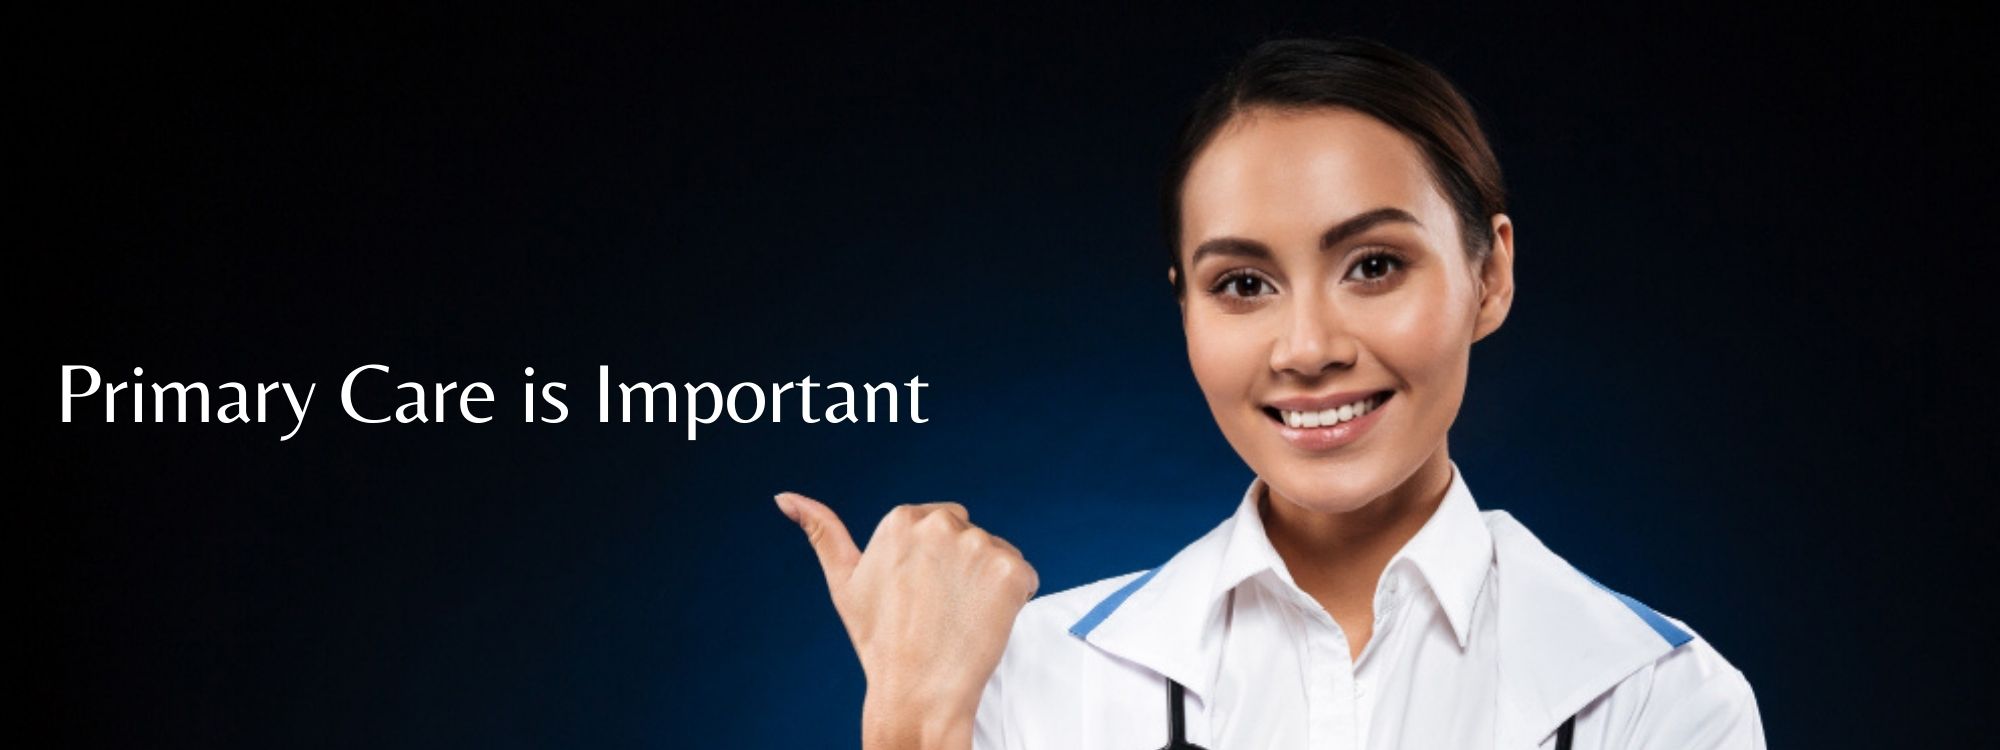 Primary Care is Important - Best Patient Care - Care Health Nurses Pvt Ltd